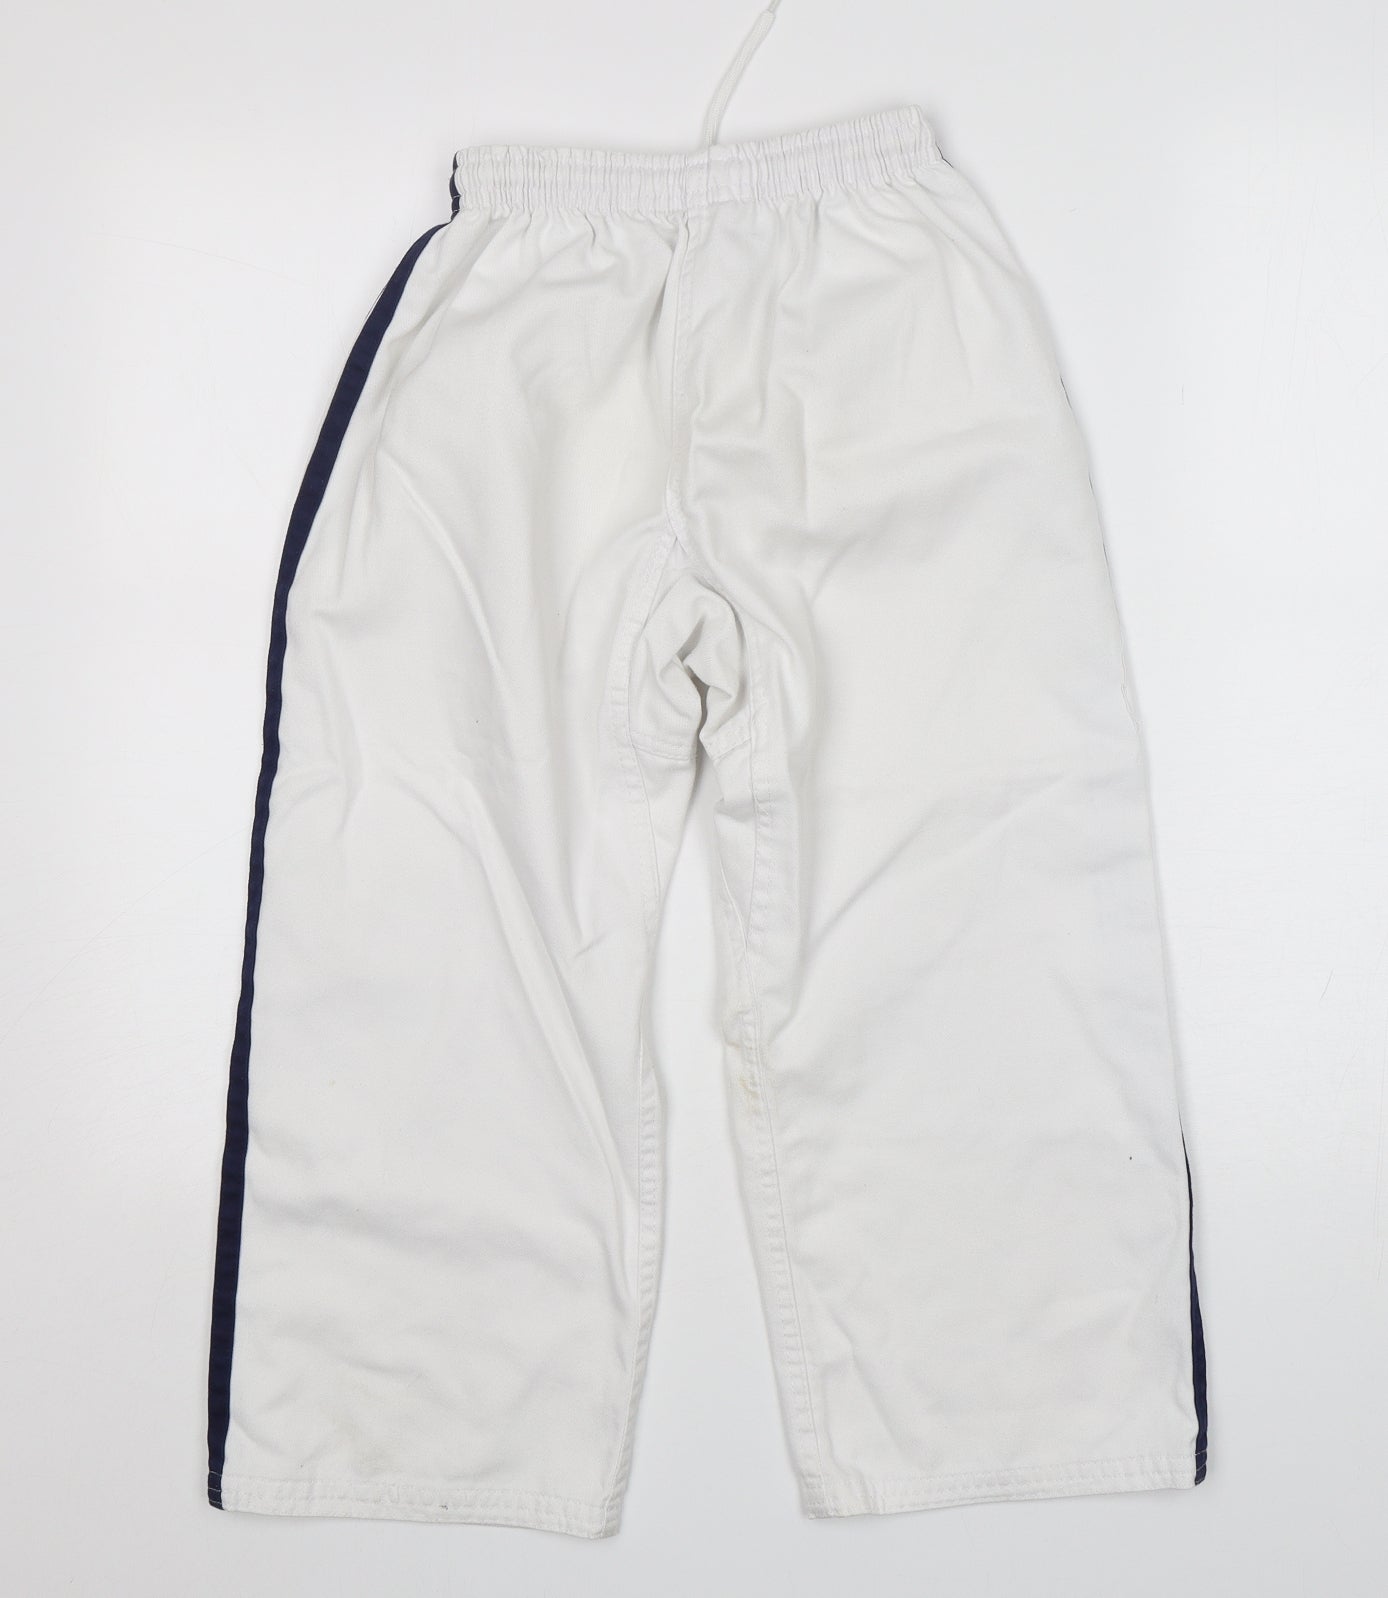 WJFF Boys White  Polyester Jogger Trousers Size 10 Years  Regular  - Jiu Jitsu trousers